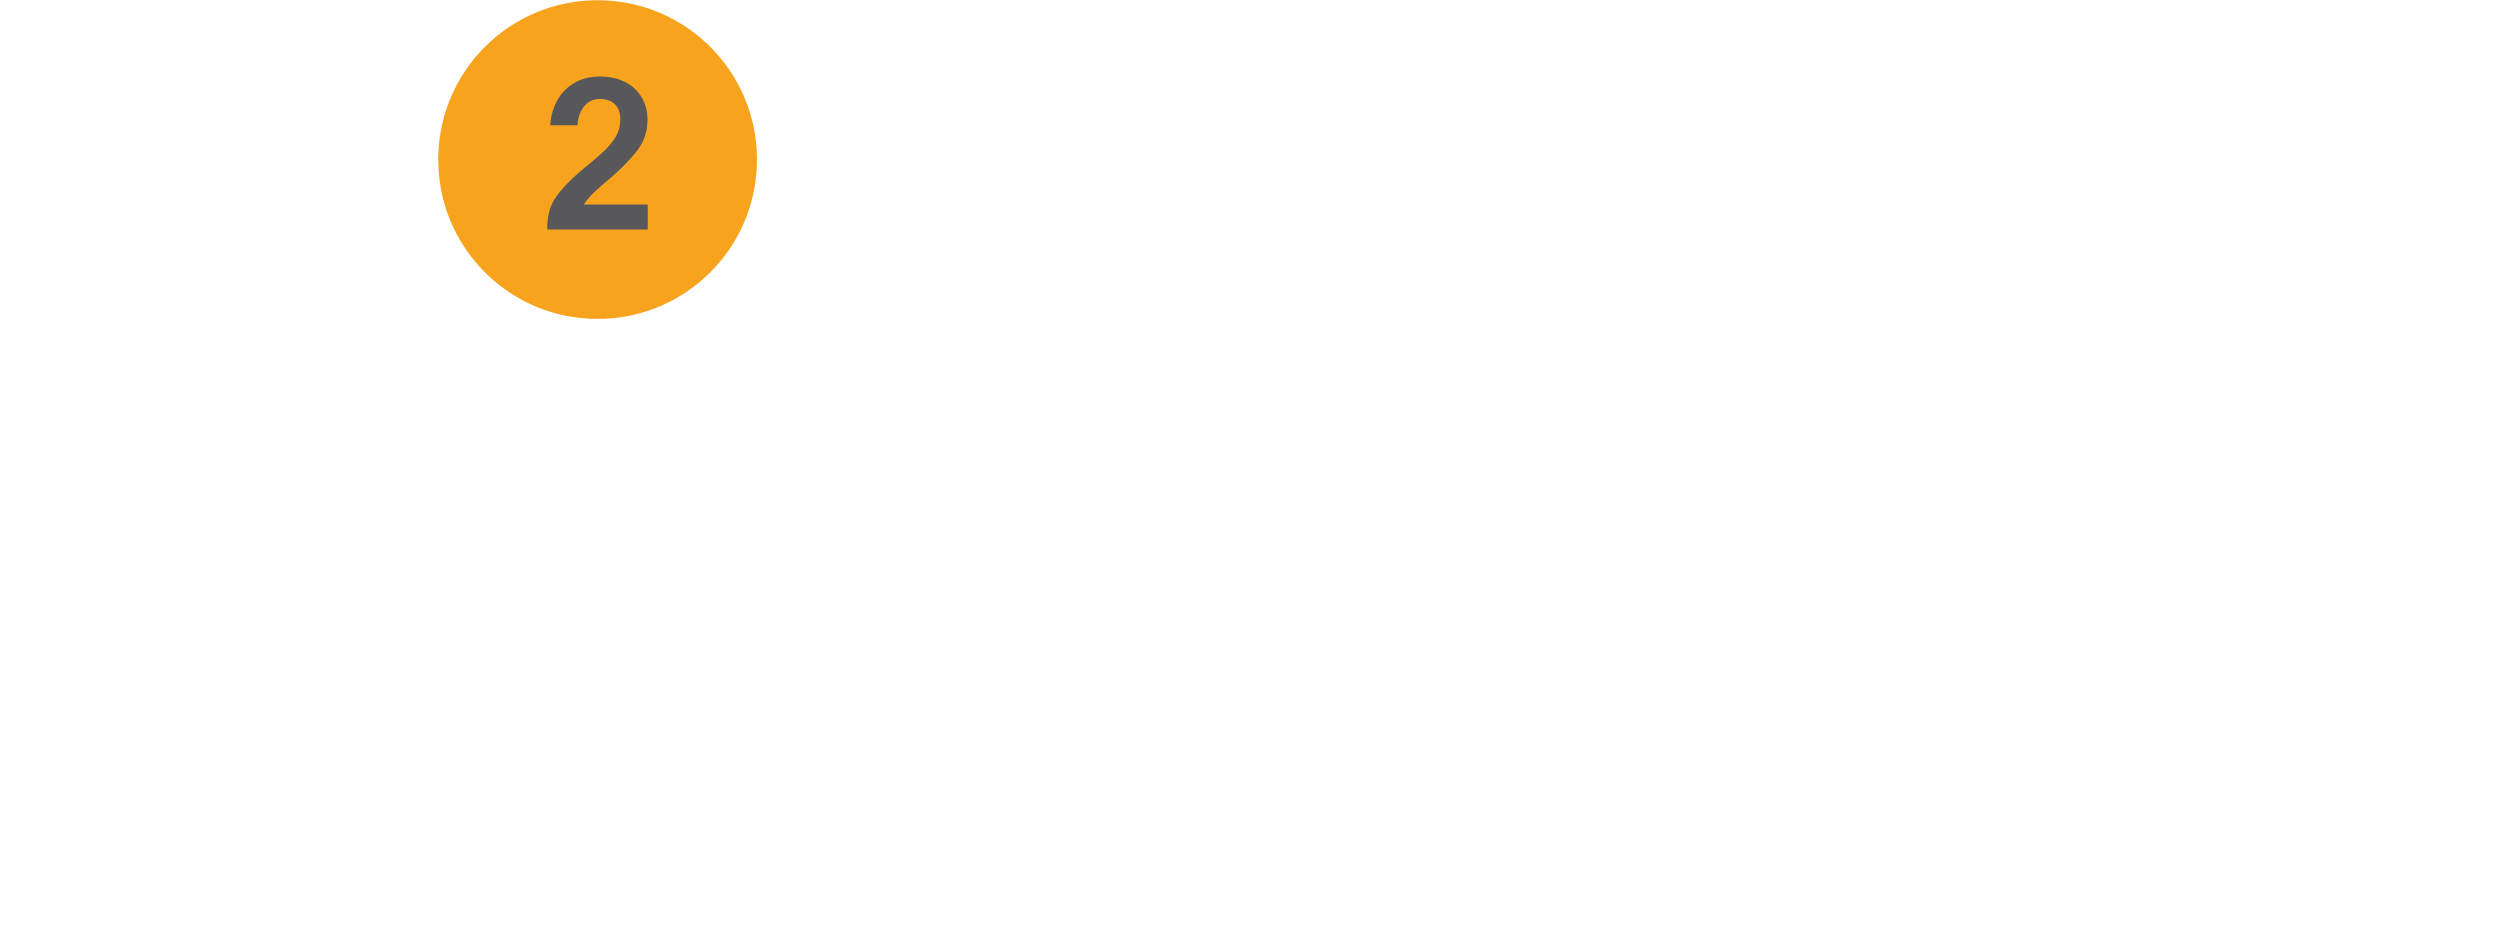 Broker to Investor Direct Financing